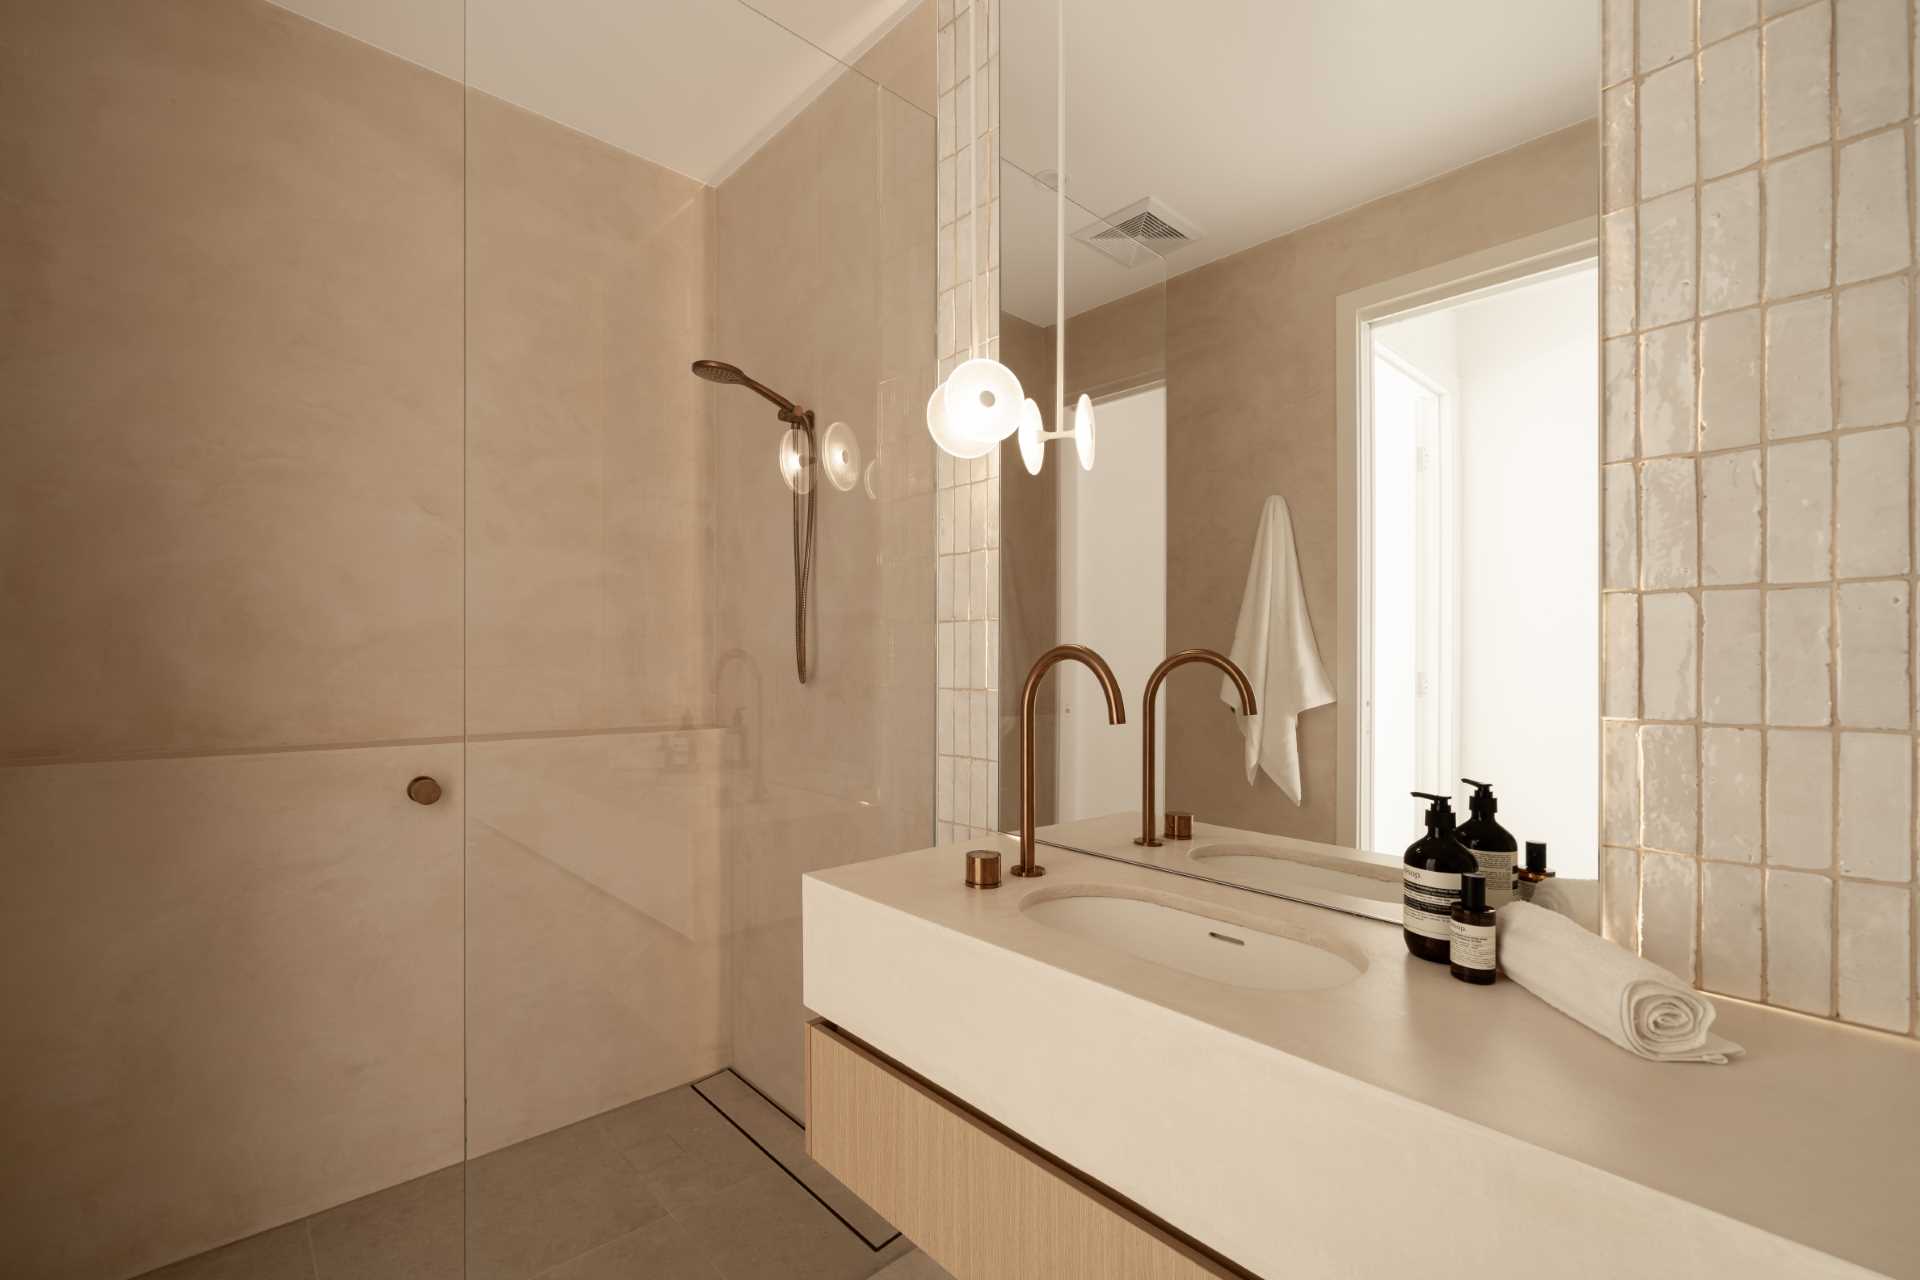 A contemporary bathroom has a shower with a shelving ledge.